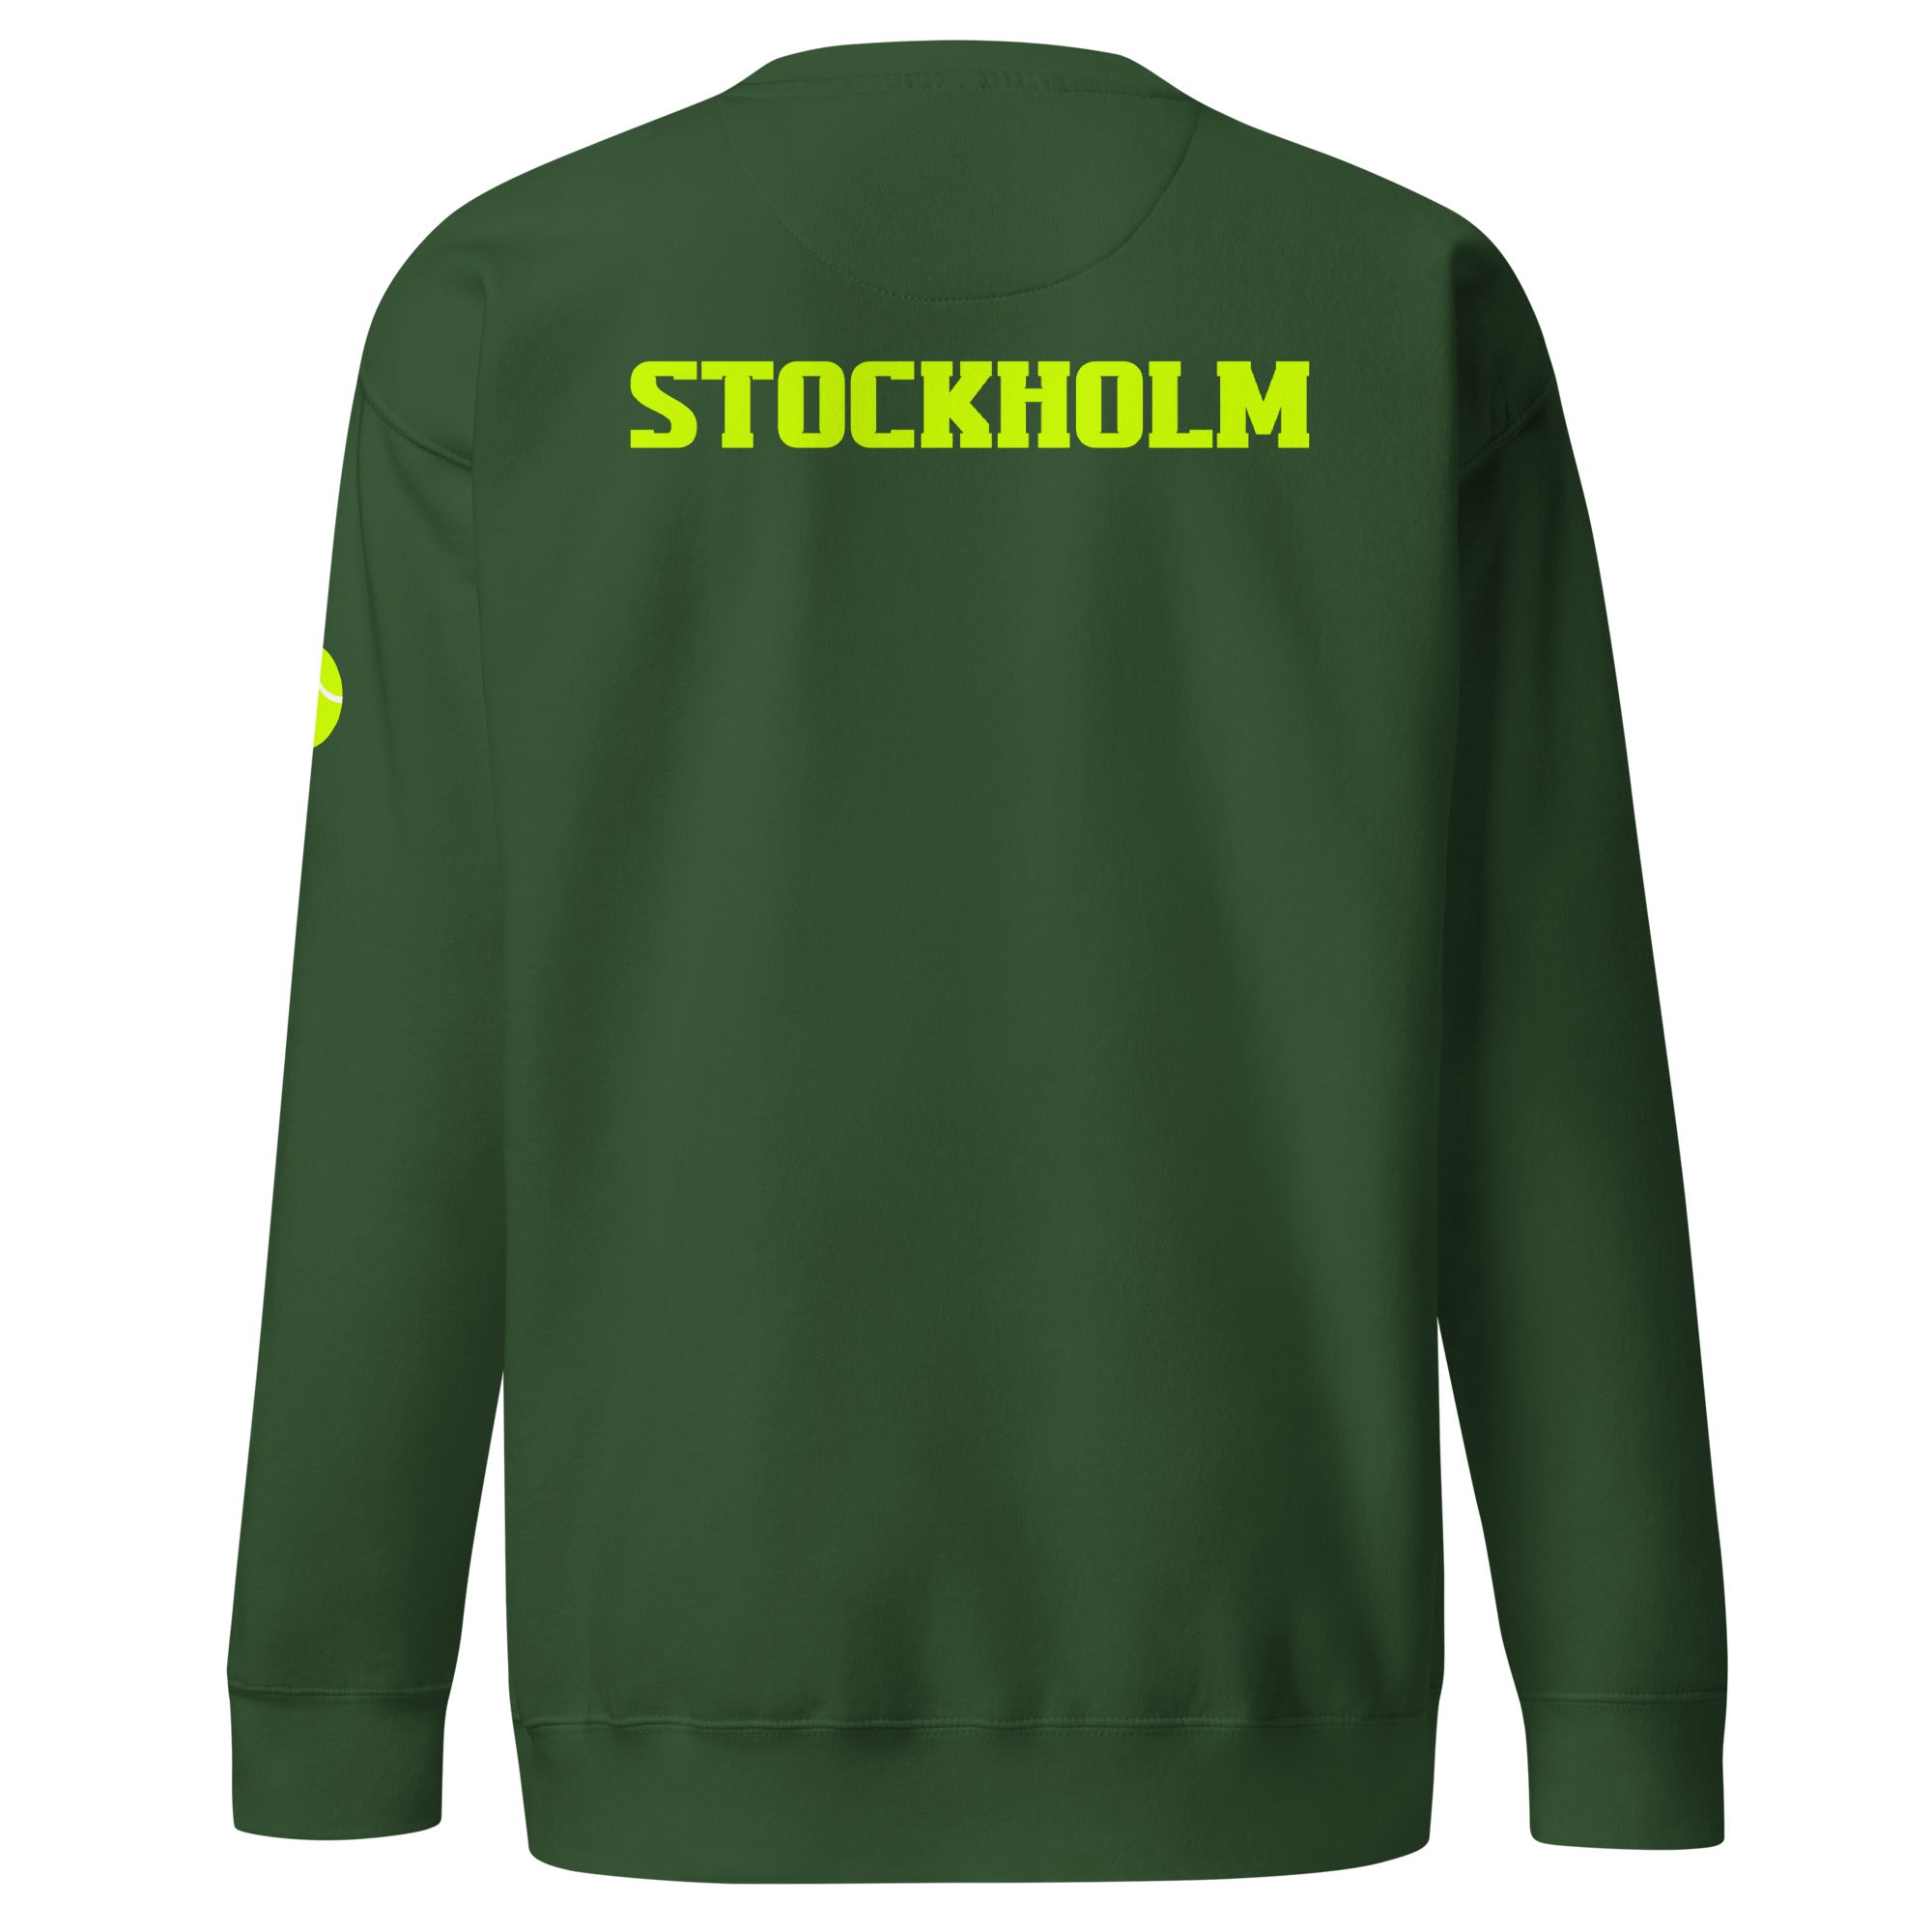 Unisex Premium Sweatshirt - Tennis Masters Stockholm - GRAPHIC T-SHIRTS